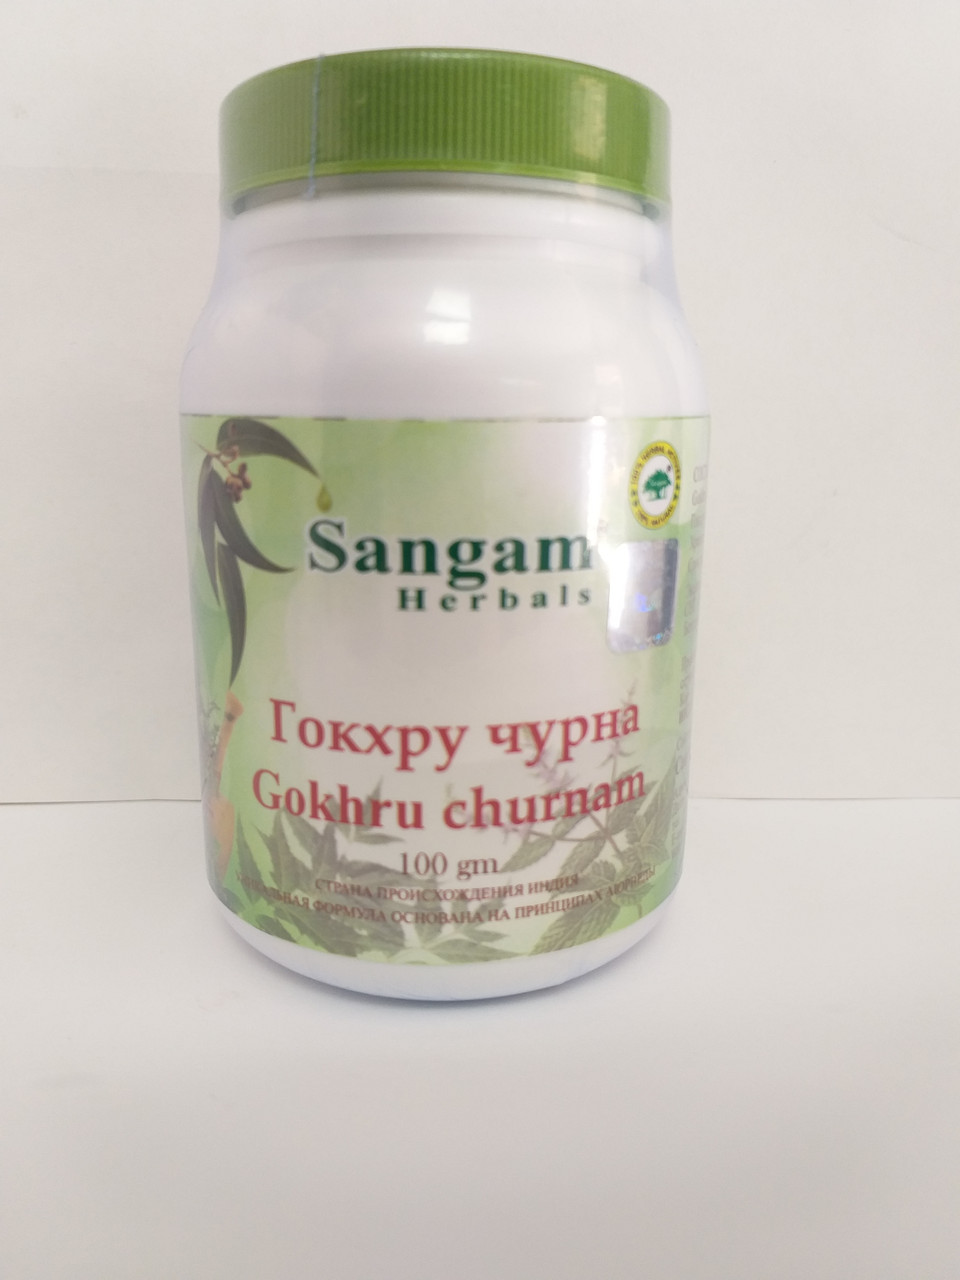 Гокхру чурна, 100 гр, Сангам, Gokhru churnam, Sangam Herbals